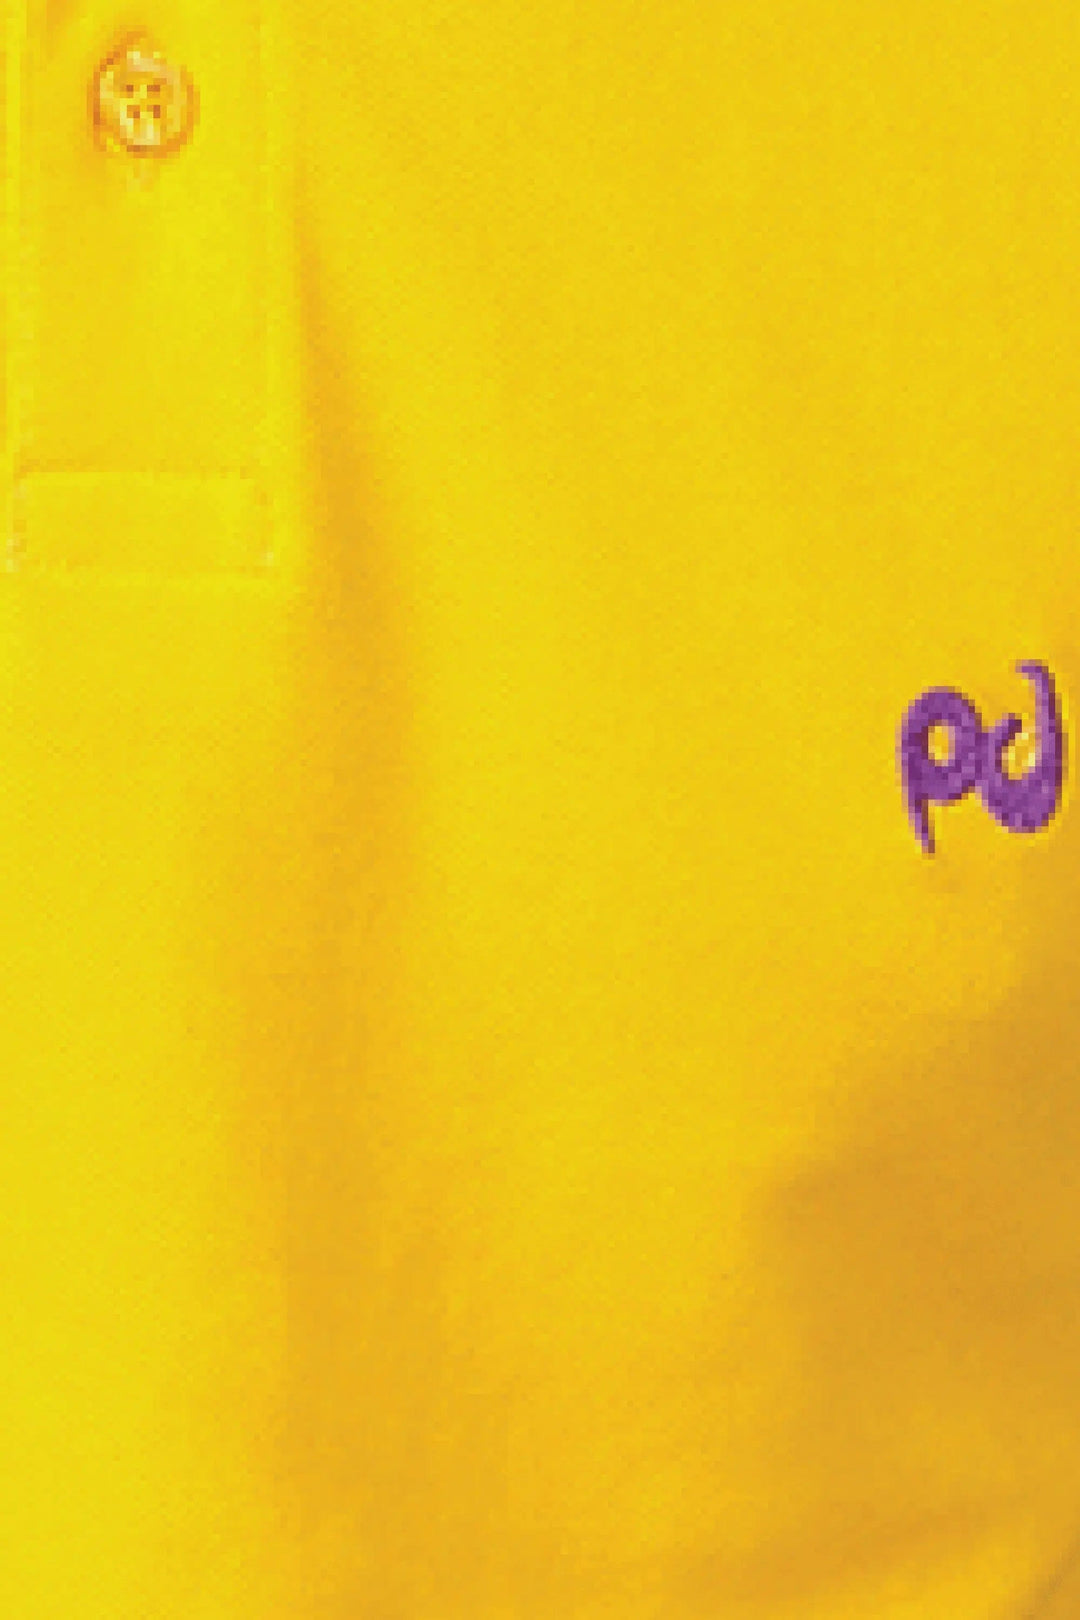 Men's Polo Neck Yellow Cotton T-shirt - Peplos Jeans 